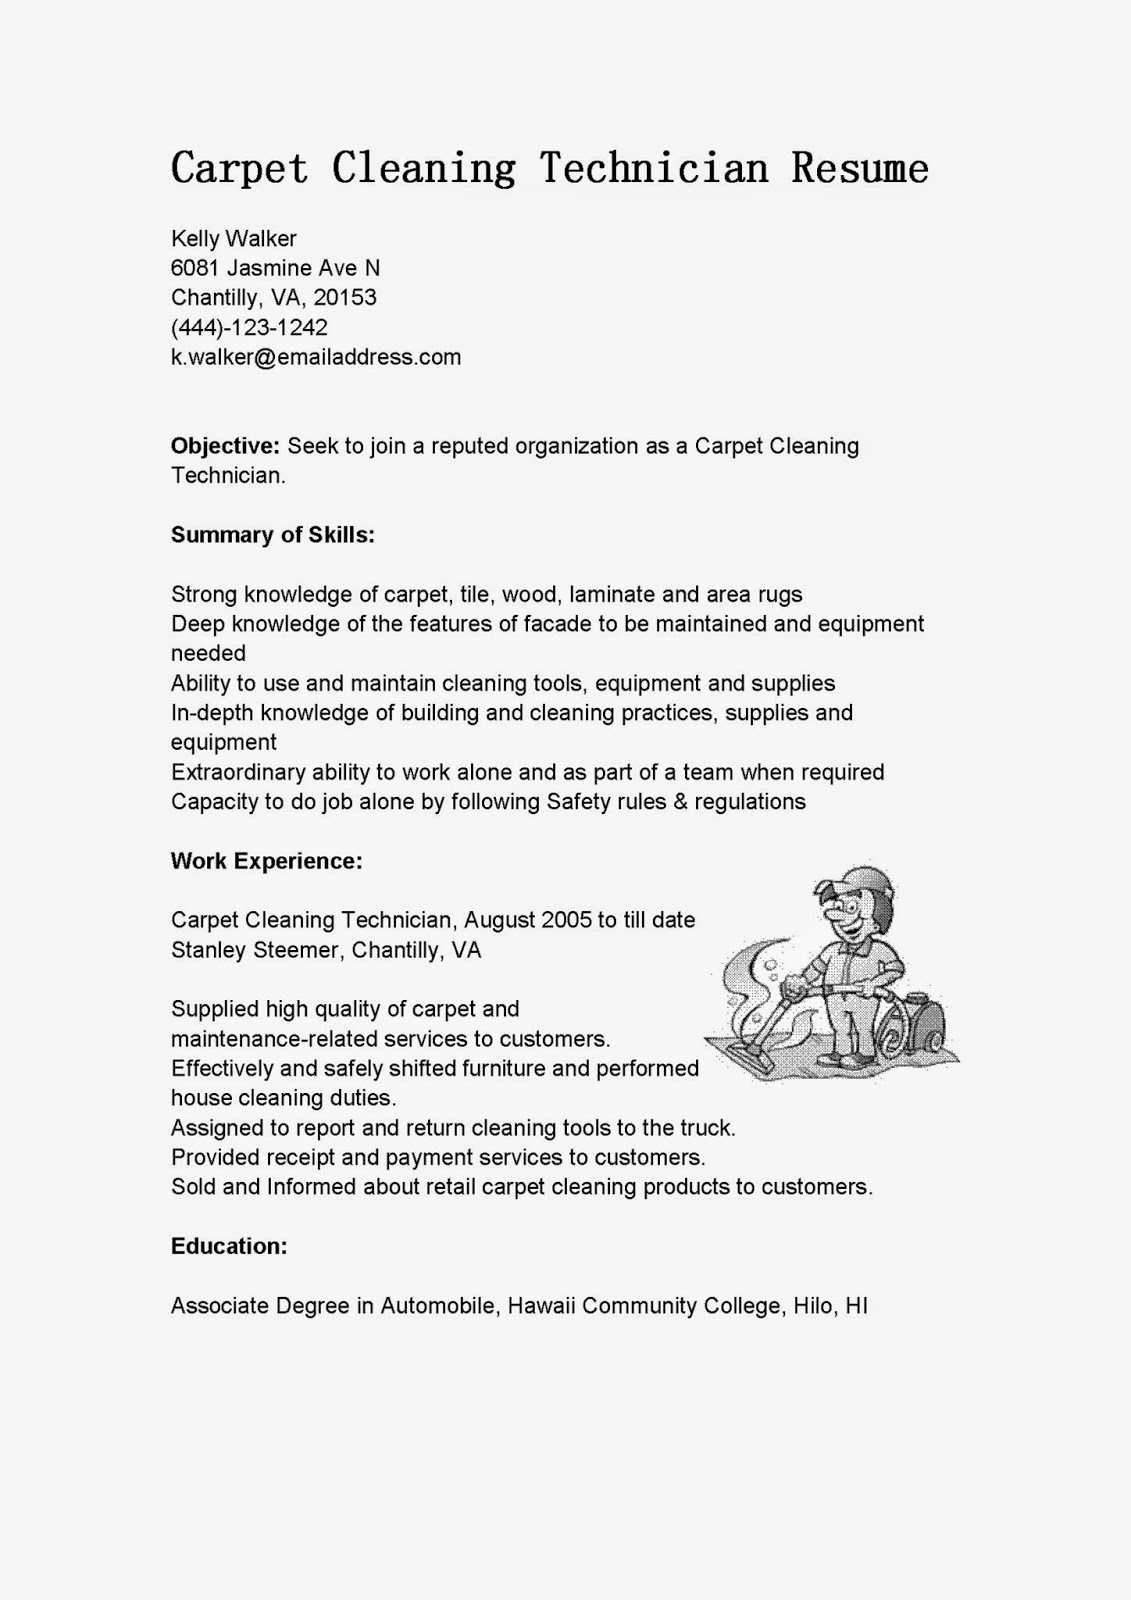 Resume Samples: Carpet Cleaning Technician Resume Sample